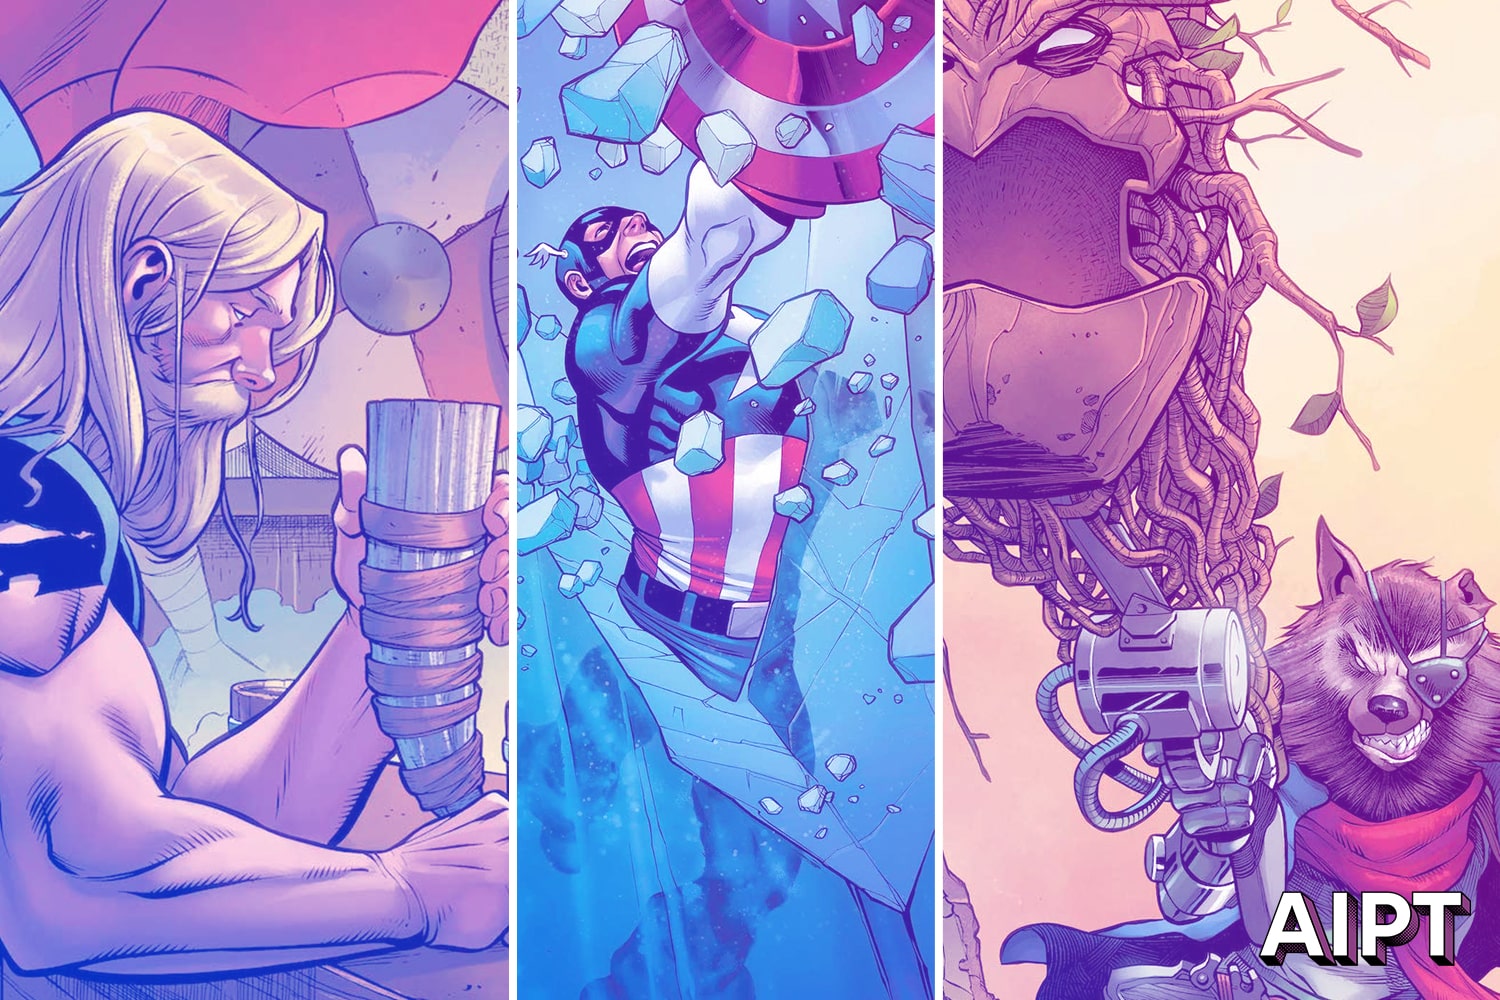 Marvel reveals new 'Heroes Reborn' covers by Carlos Pacheco hinting at heroic origins